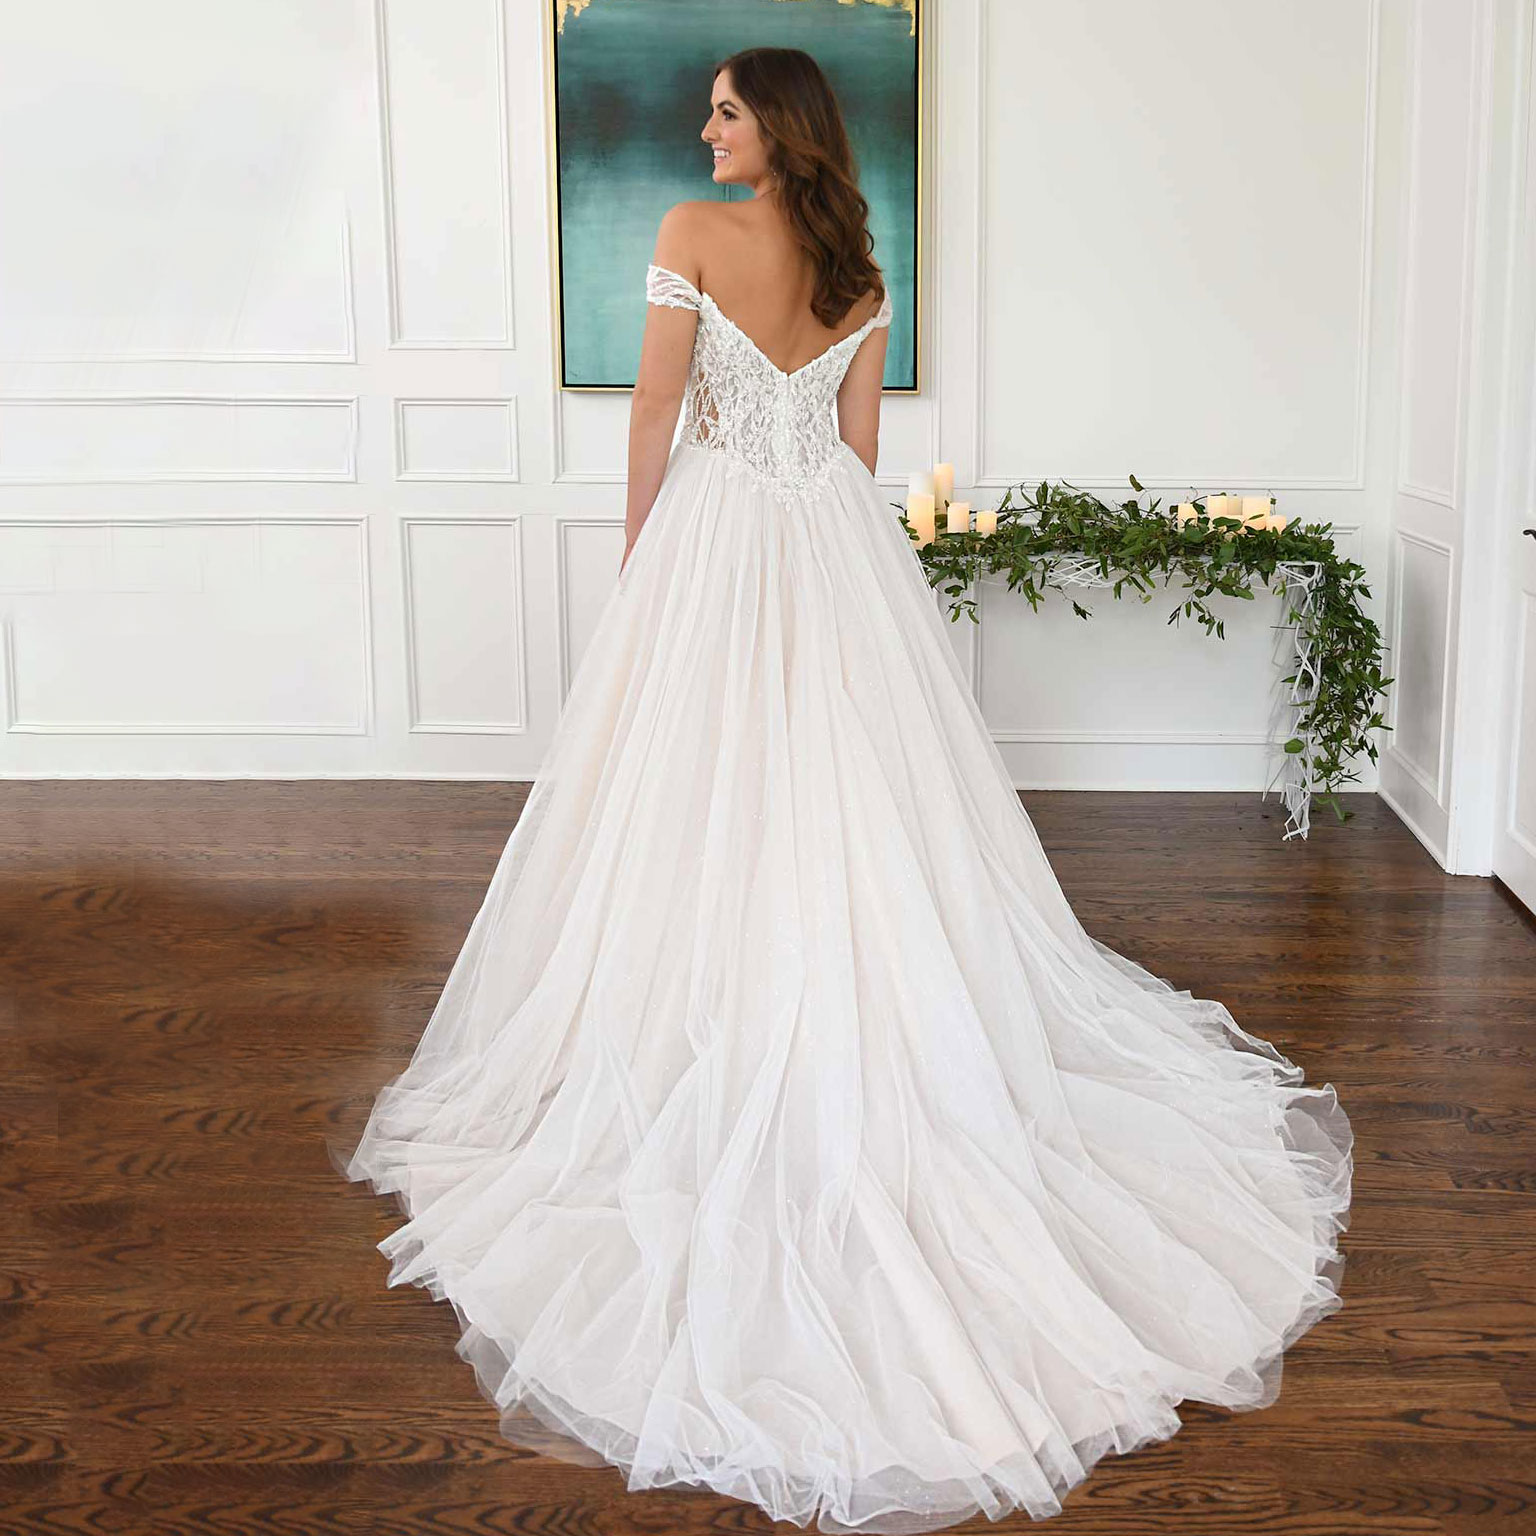 Romantic ballgown wedding dress